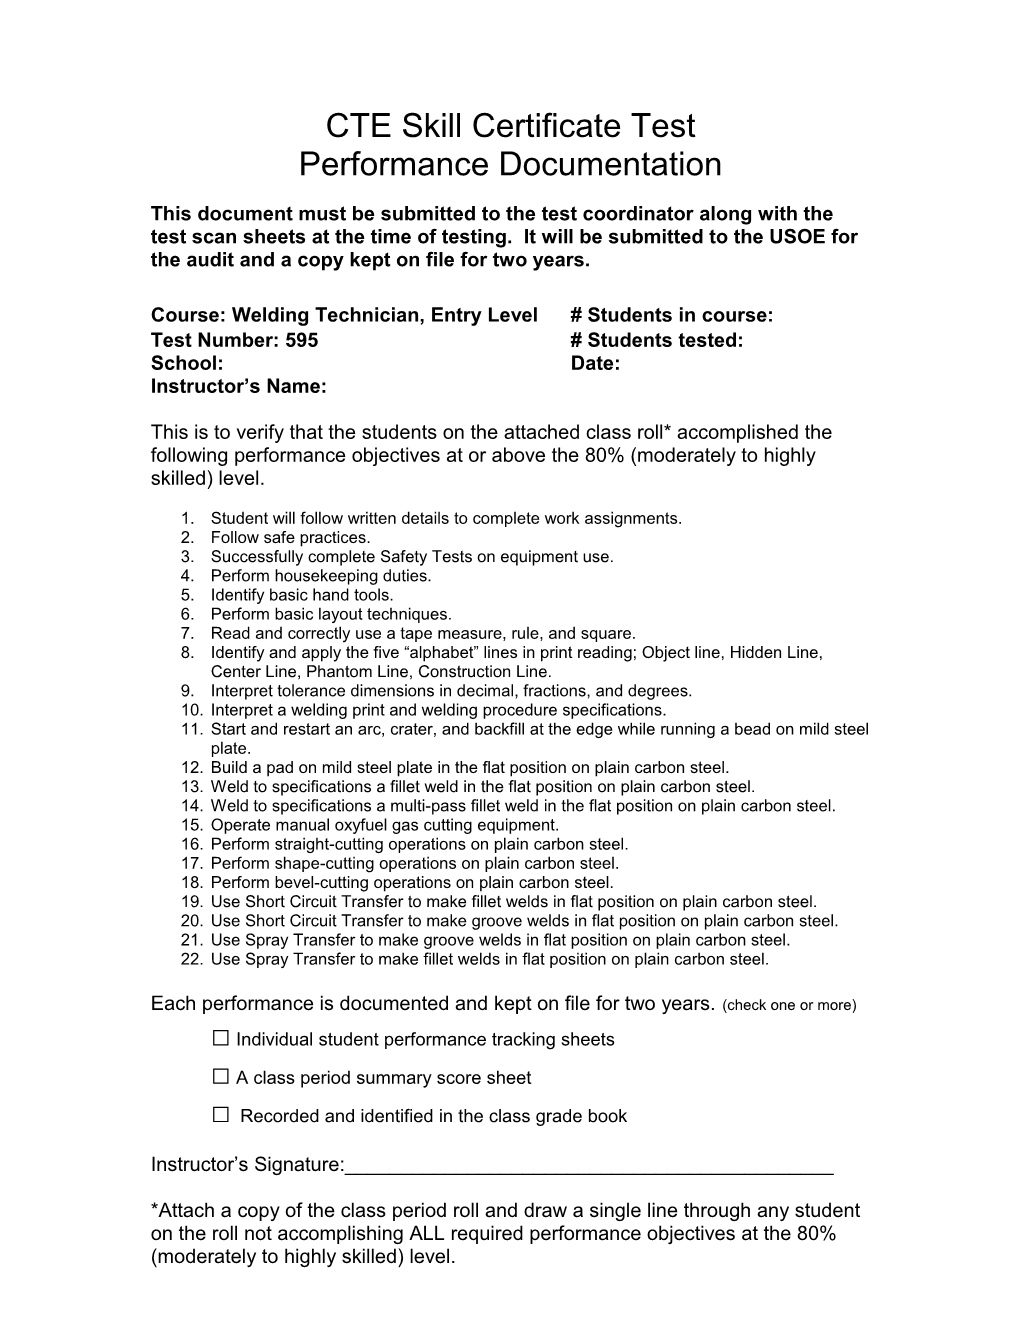 CTE Skill Certificate Performance